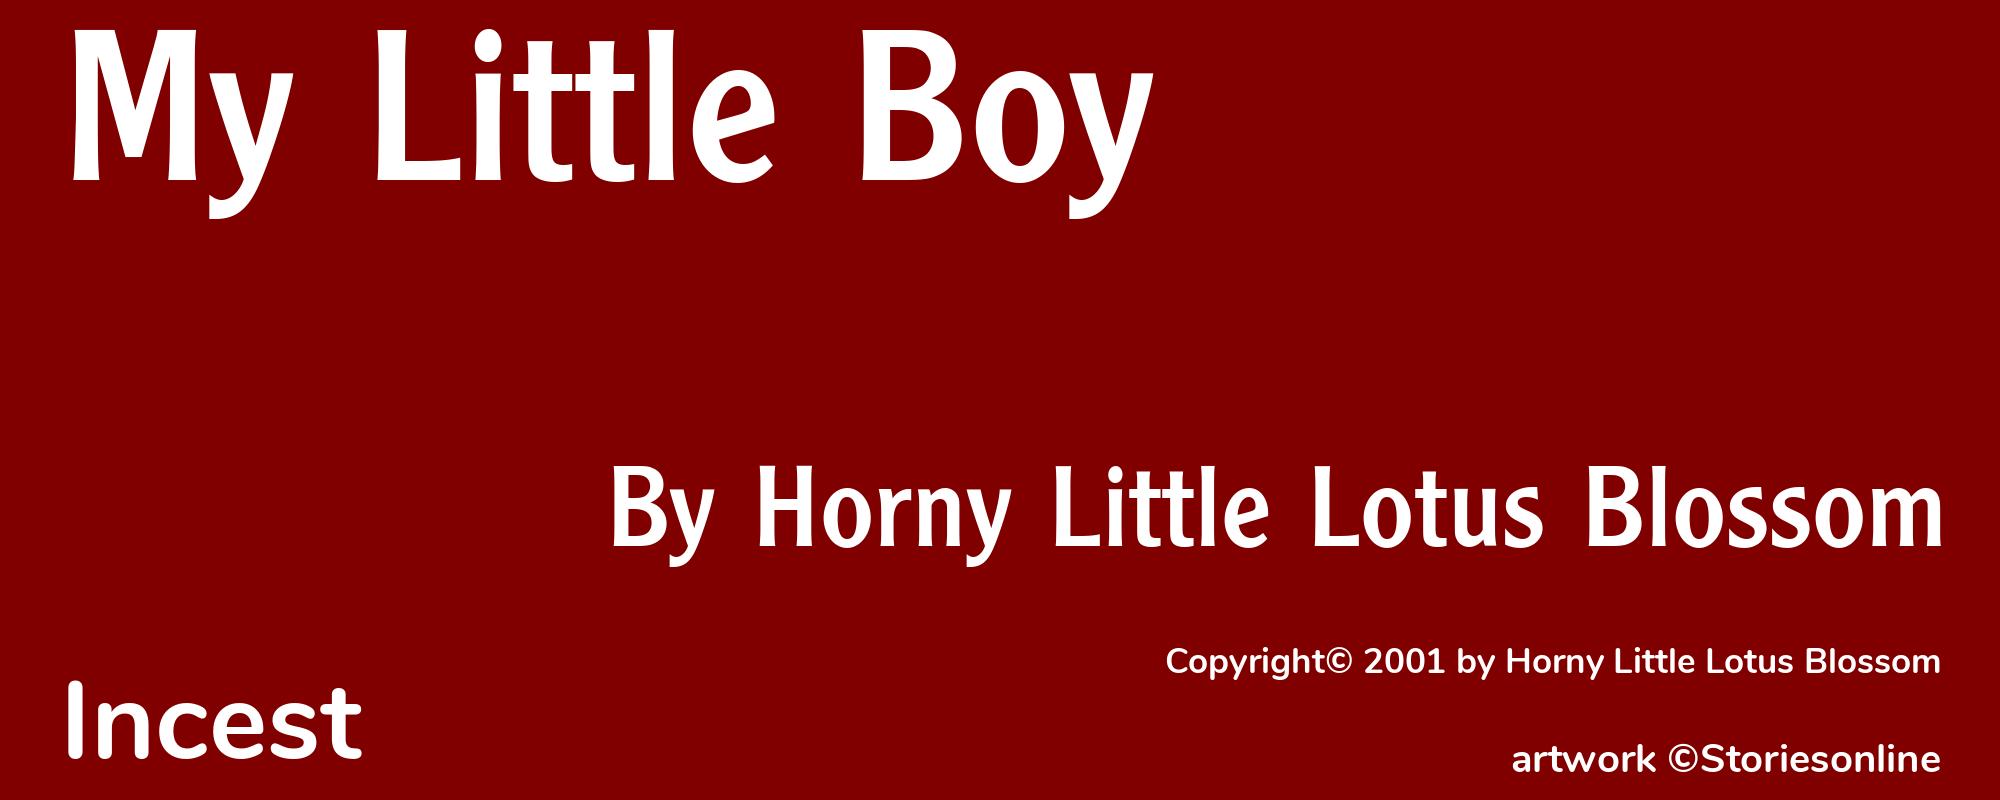 My Little Boy - Cover